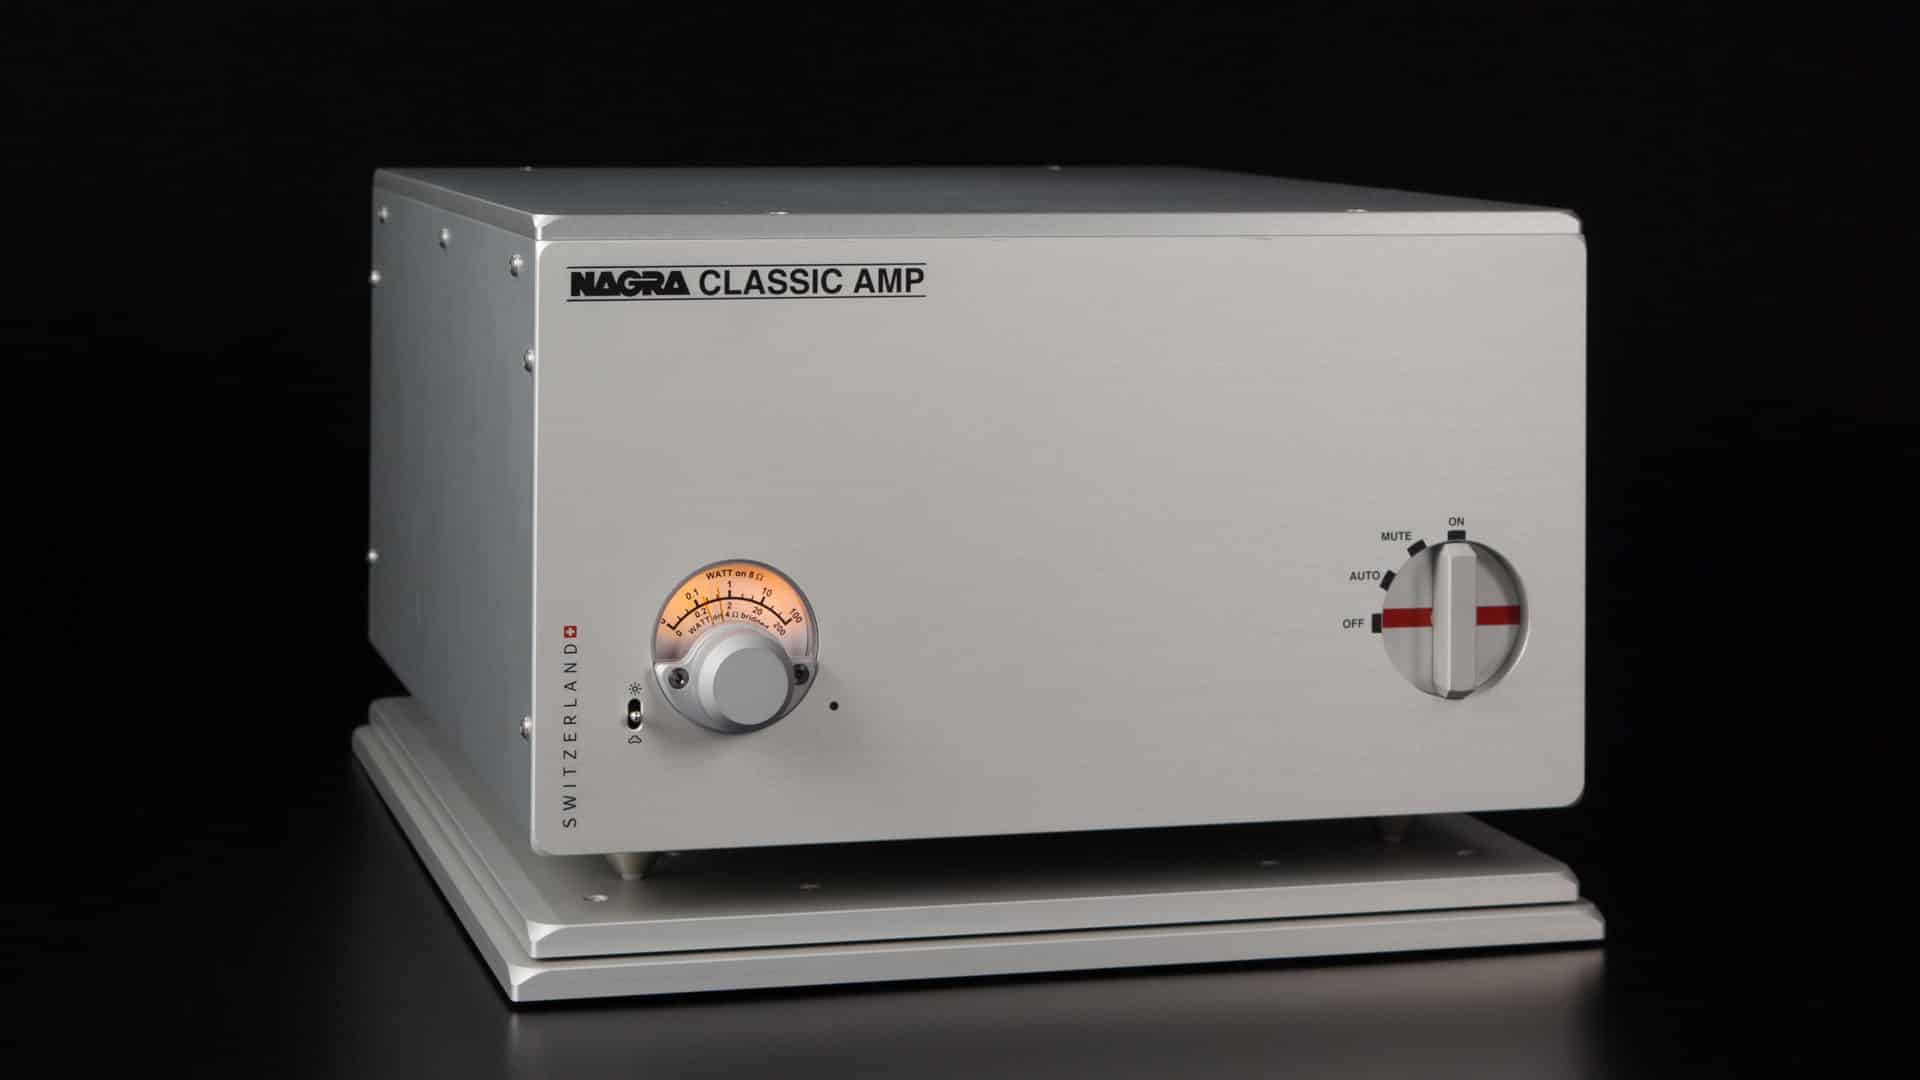 Classic Amp - Nagra